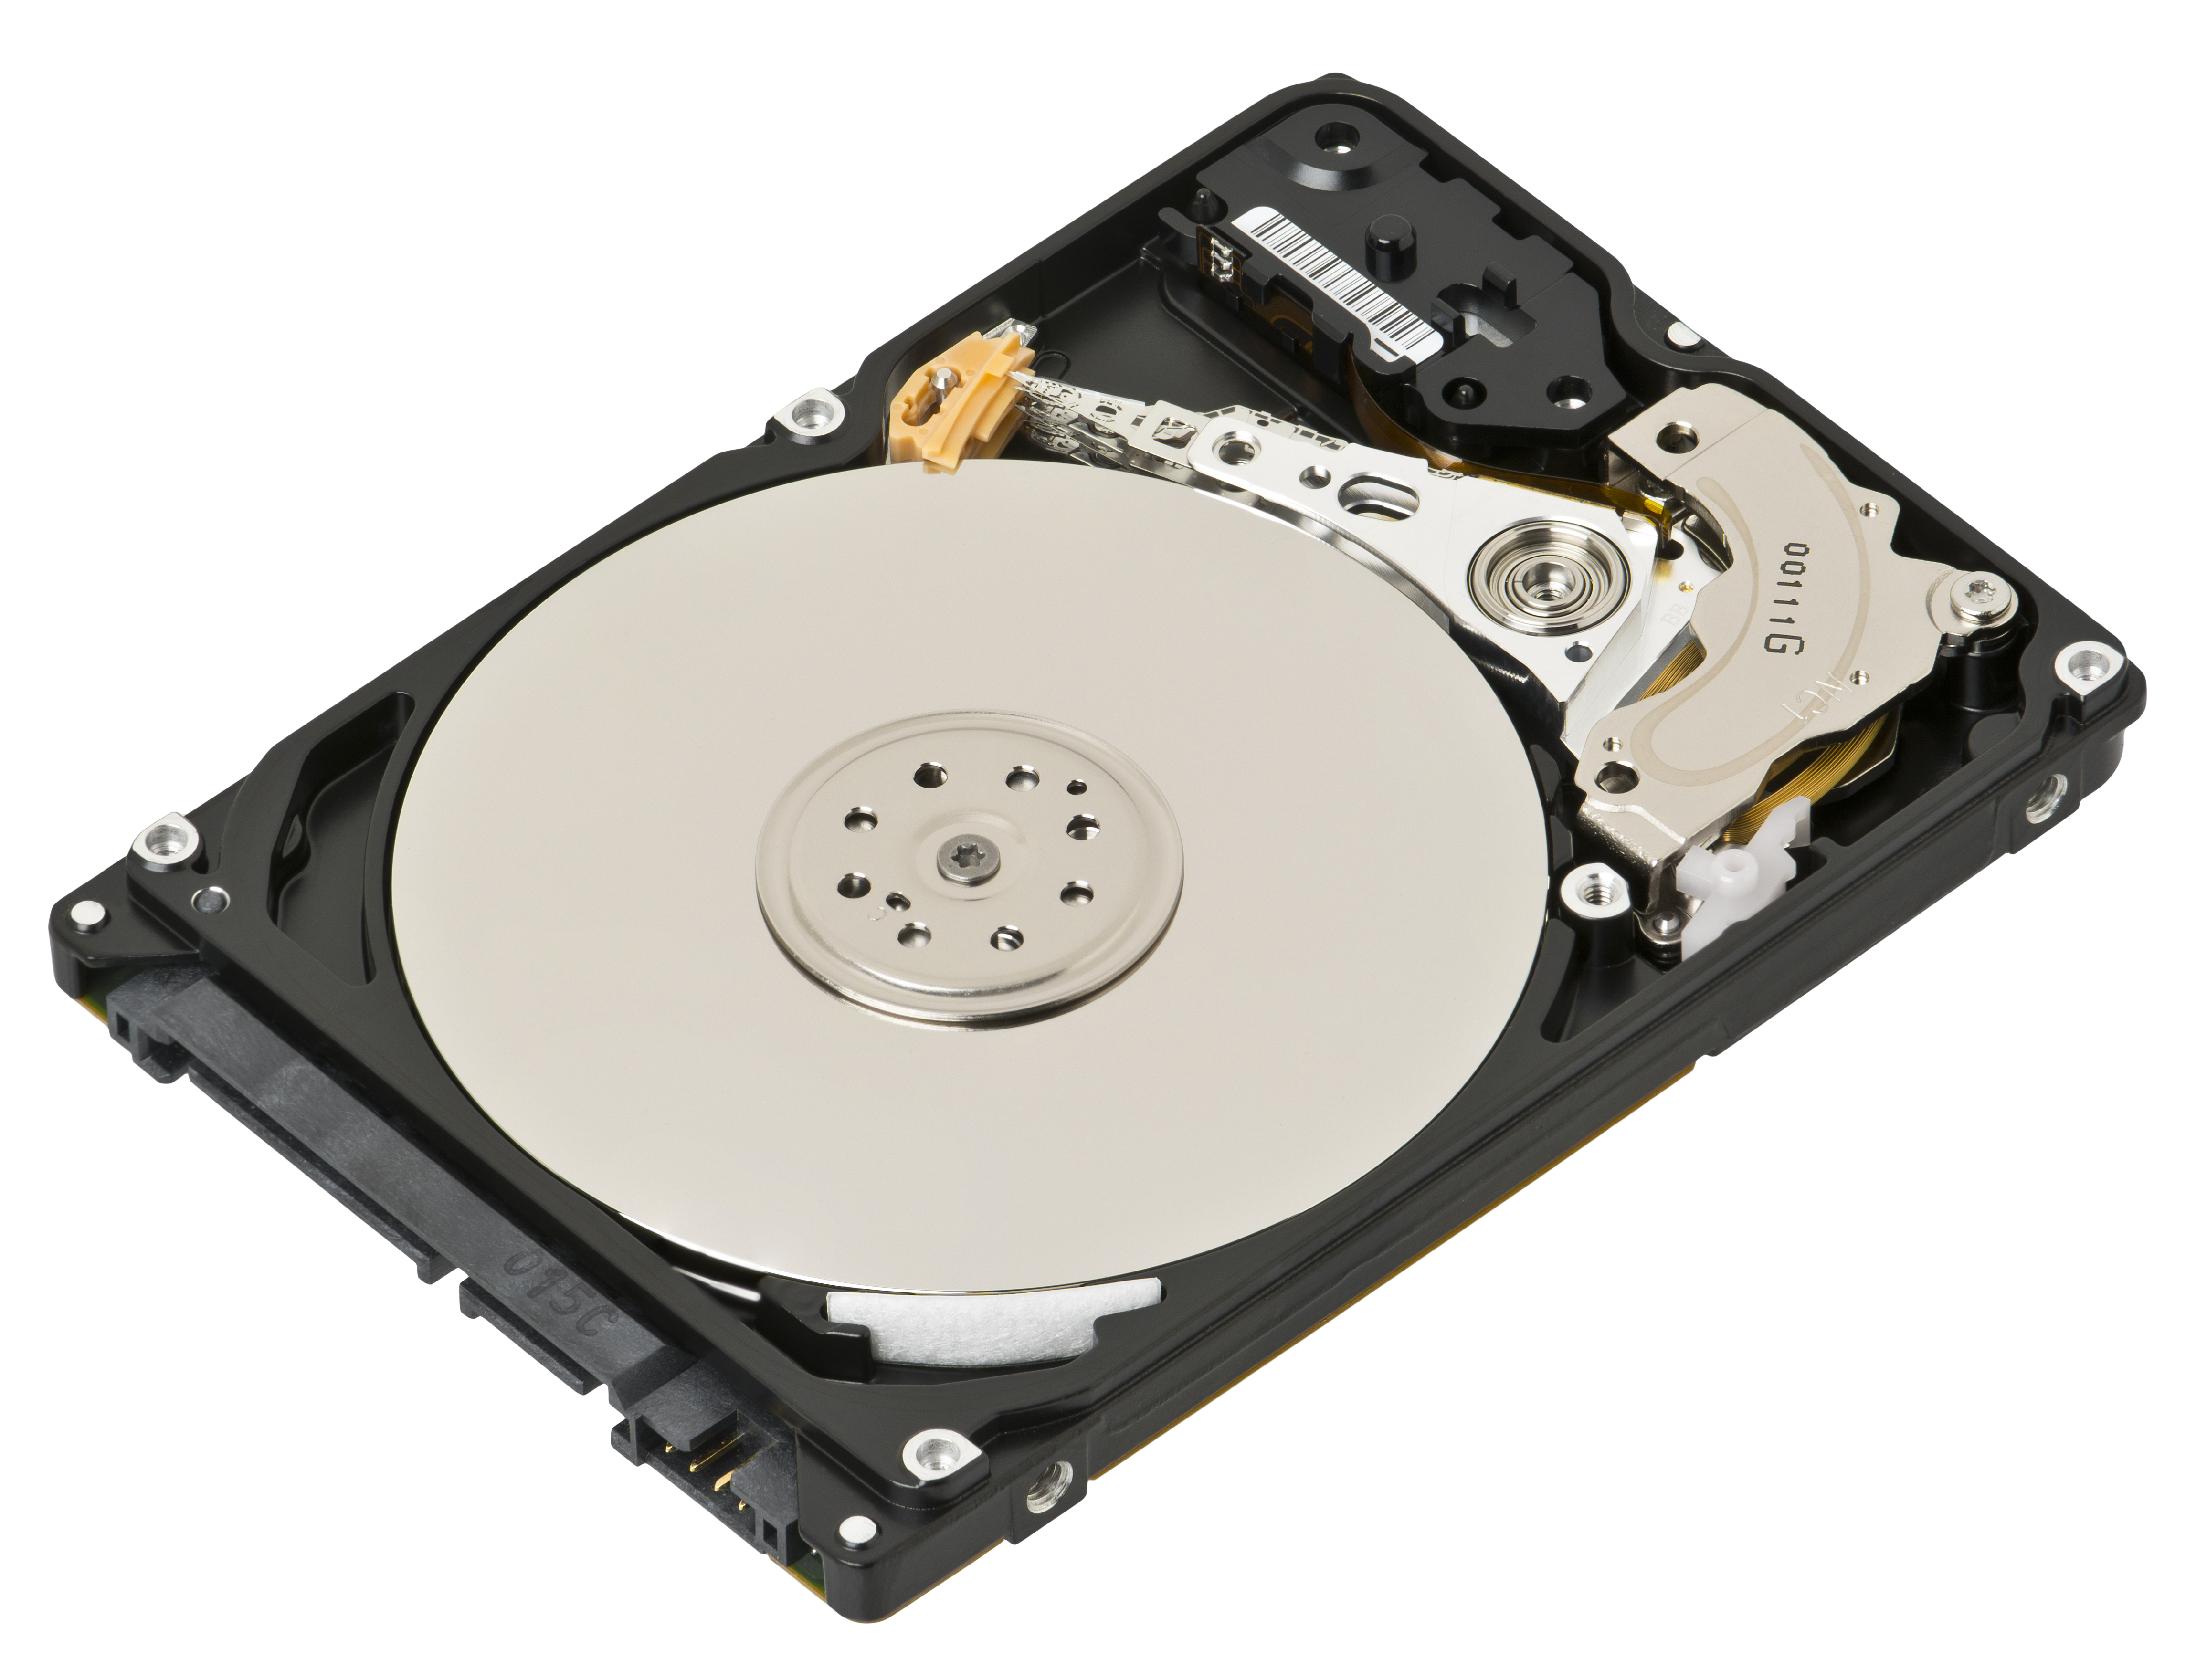 HP P8983-63001 hard disk drive 10GB 3.5 inch IDE 5400RPM